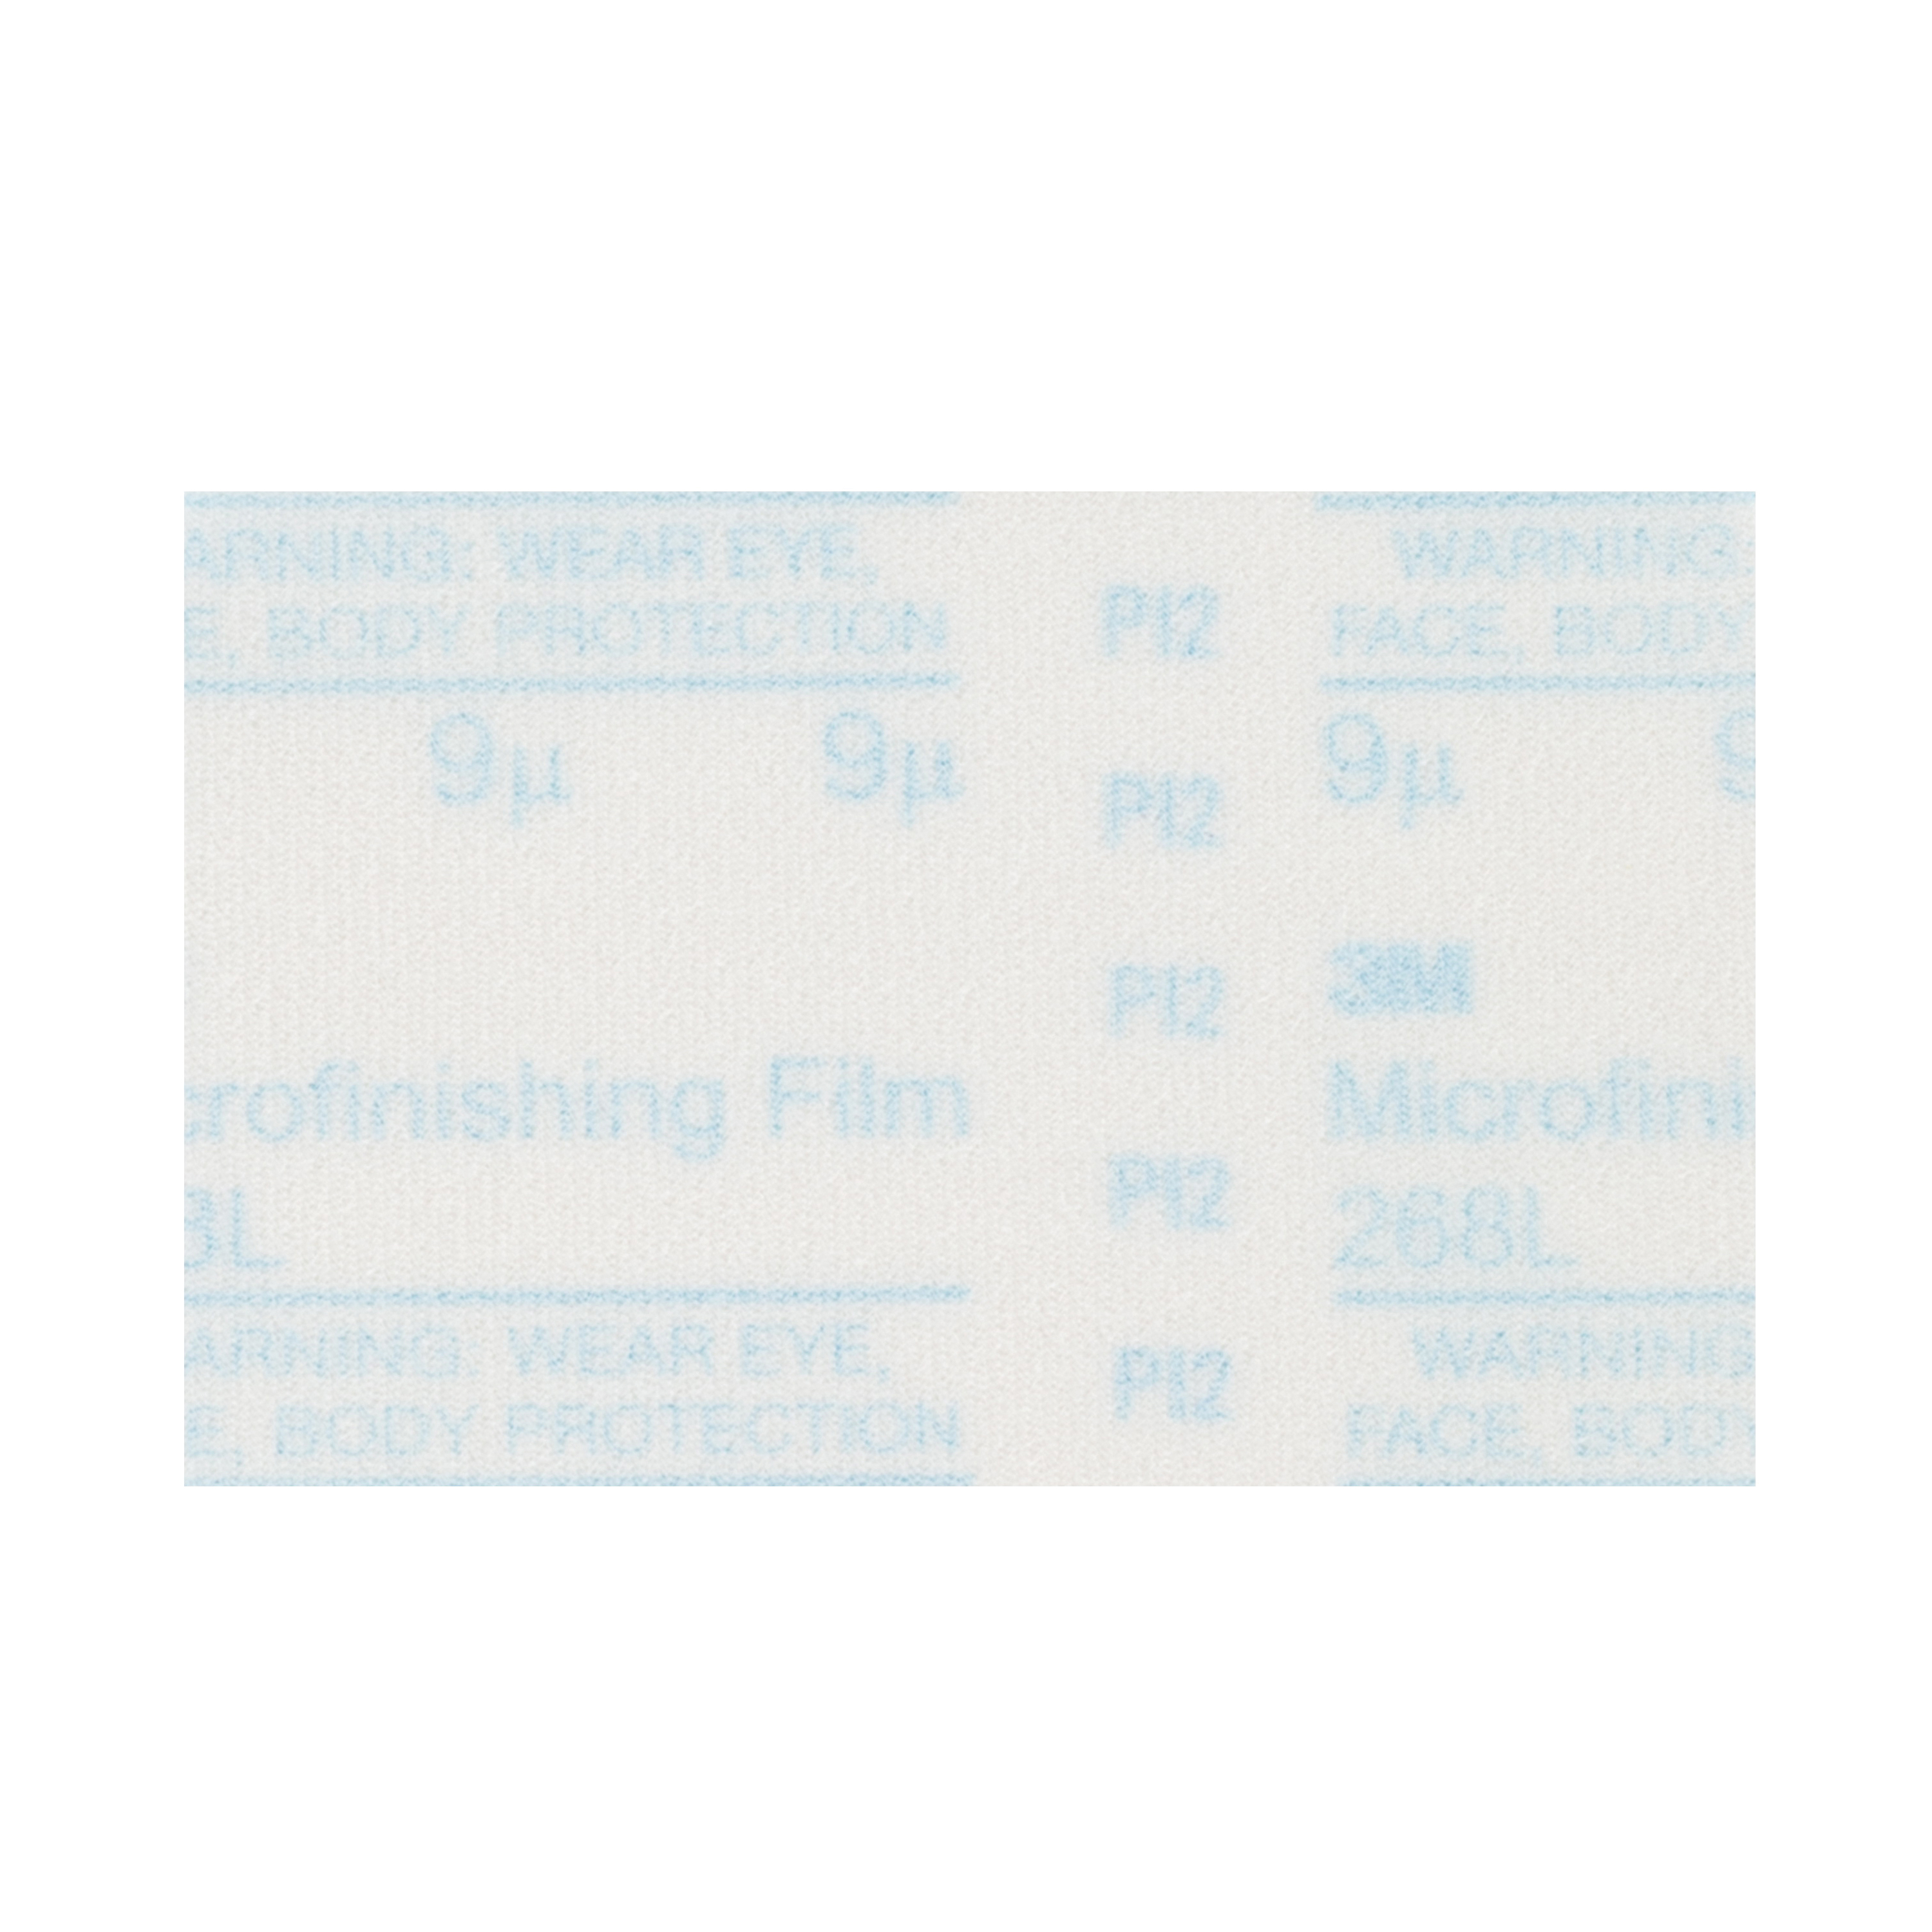 3M™ 051111-54509 268L Type D Microfinishing PSA Carbide Burr, 3 in Dia Disc, 9 micron Grit, Ultra Fine Grade, Aluminum Oxide Abrasive, Polyester Film Backing